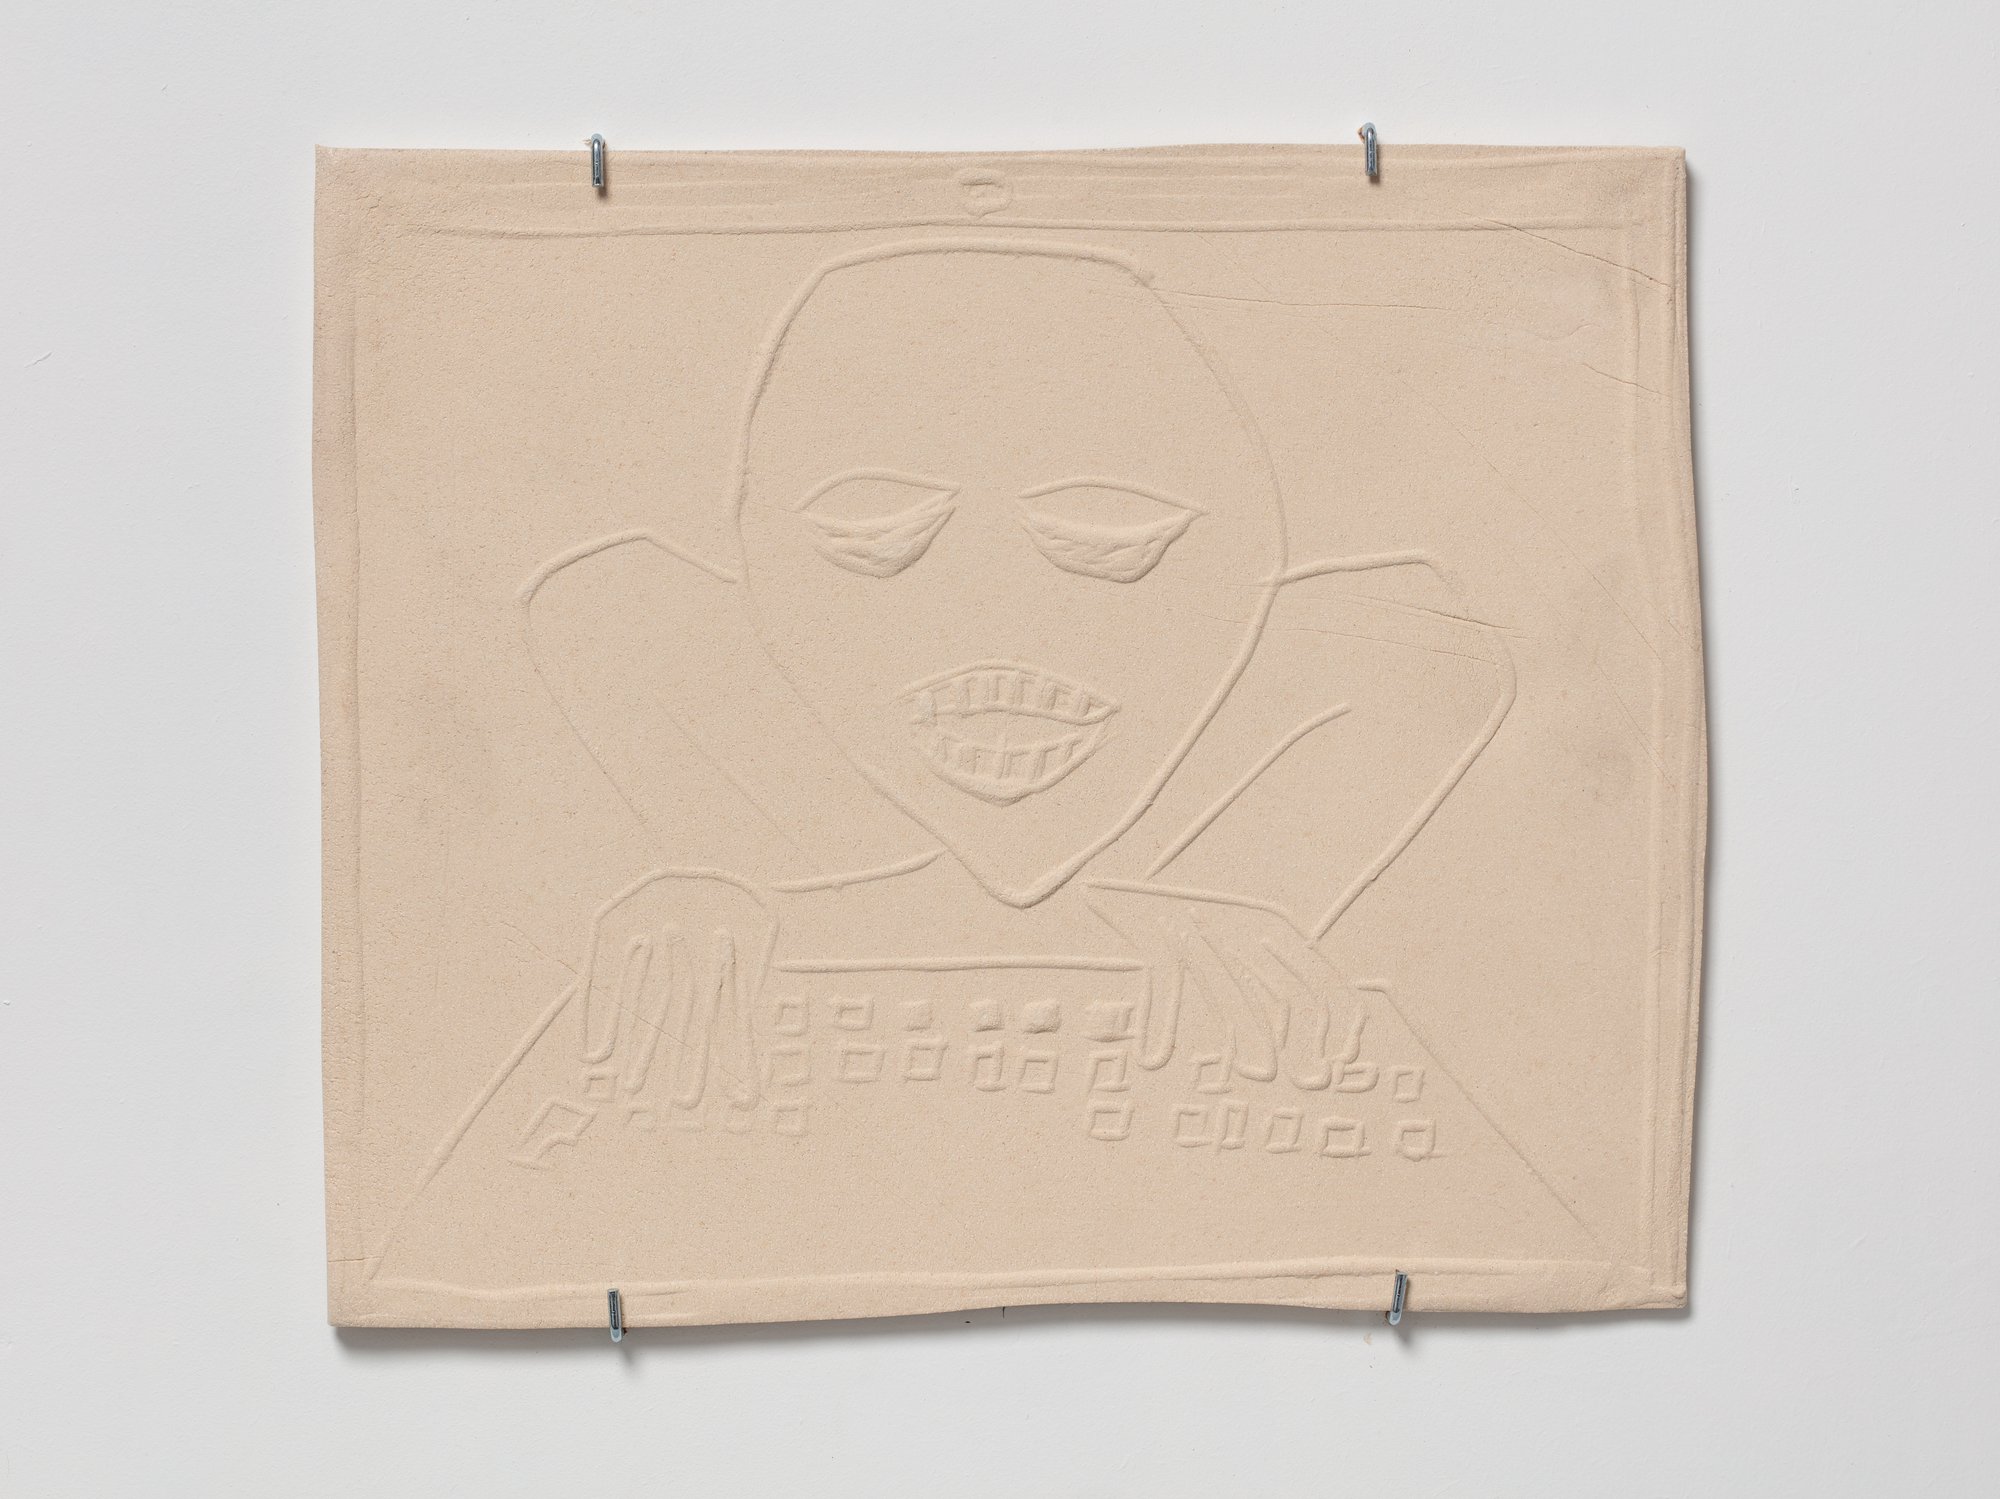 Sidsel Meineche Hansen, Laptop curator, imprint in clay, 47 x 40 cm, 2018